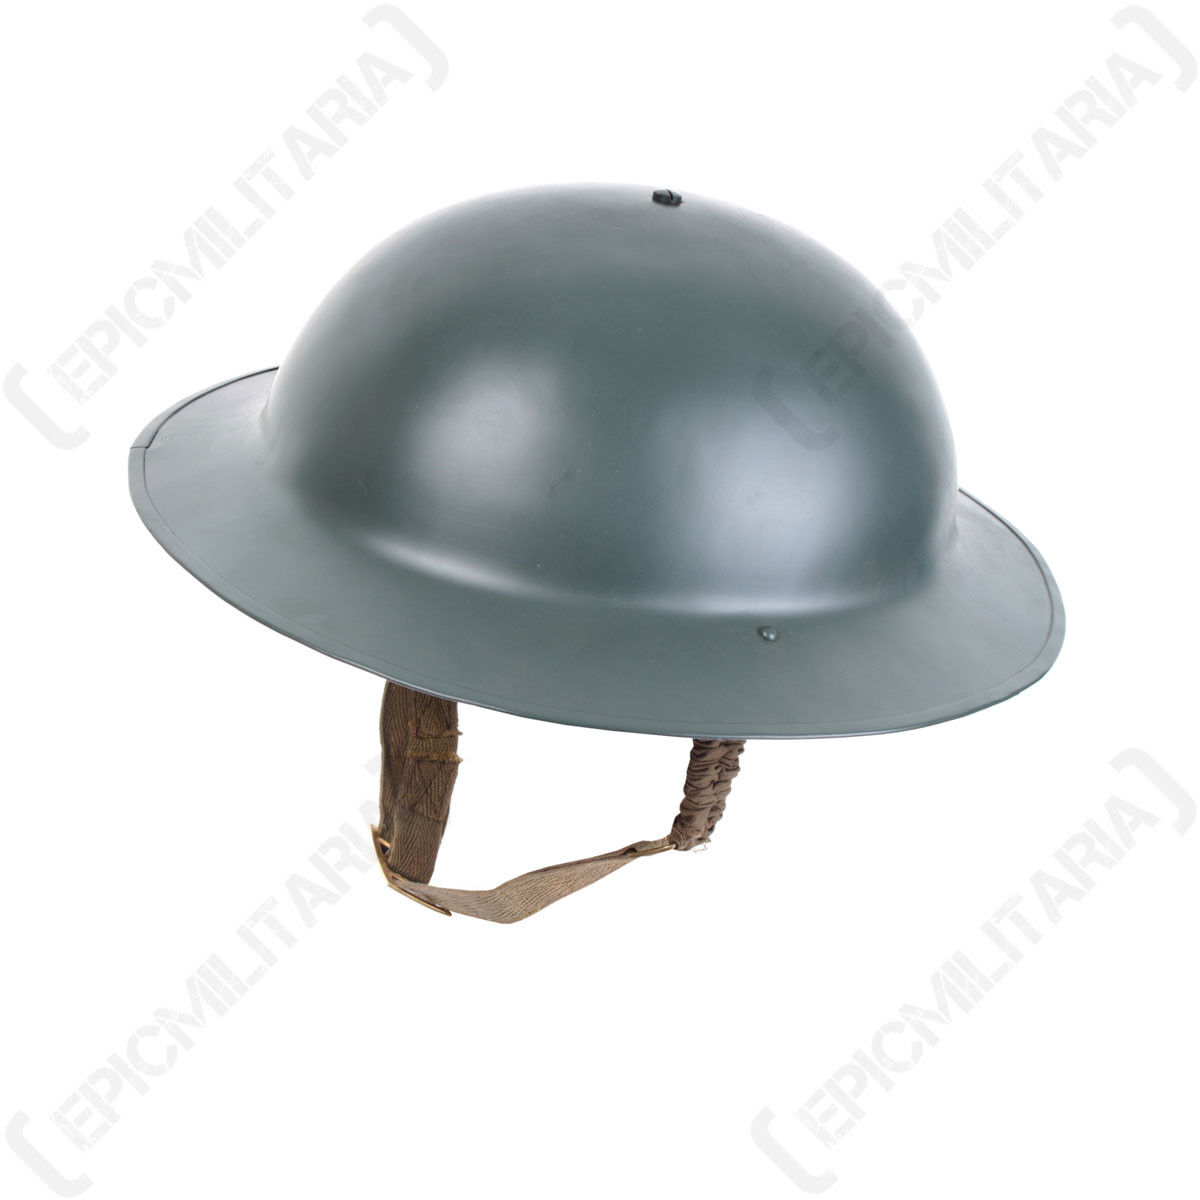 British Brodie Helmet - WW1 WW2 Doughboy Army Military Soldier Uniform Repro New